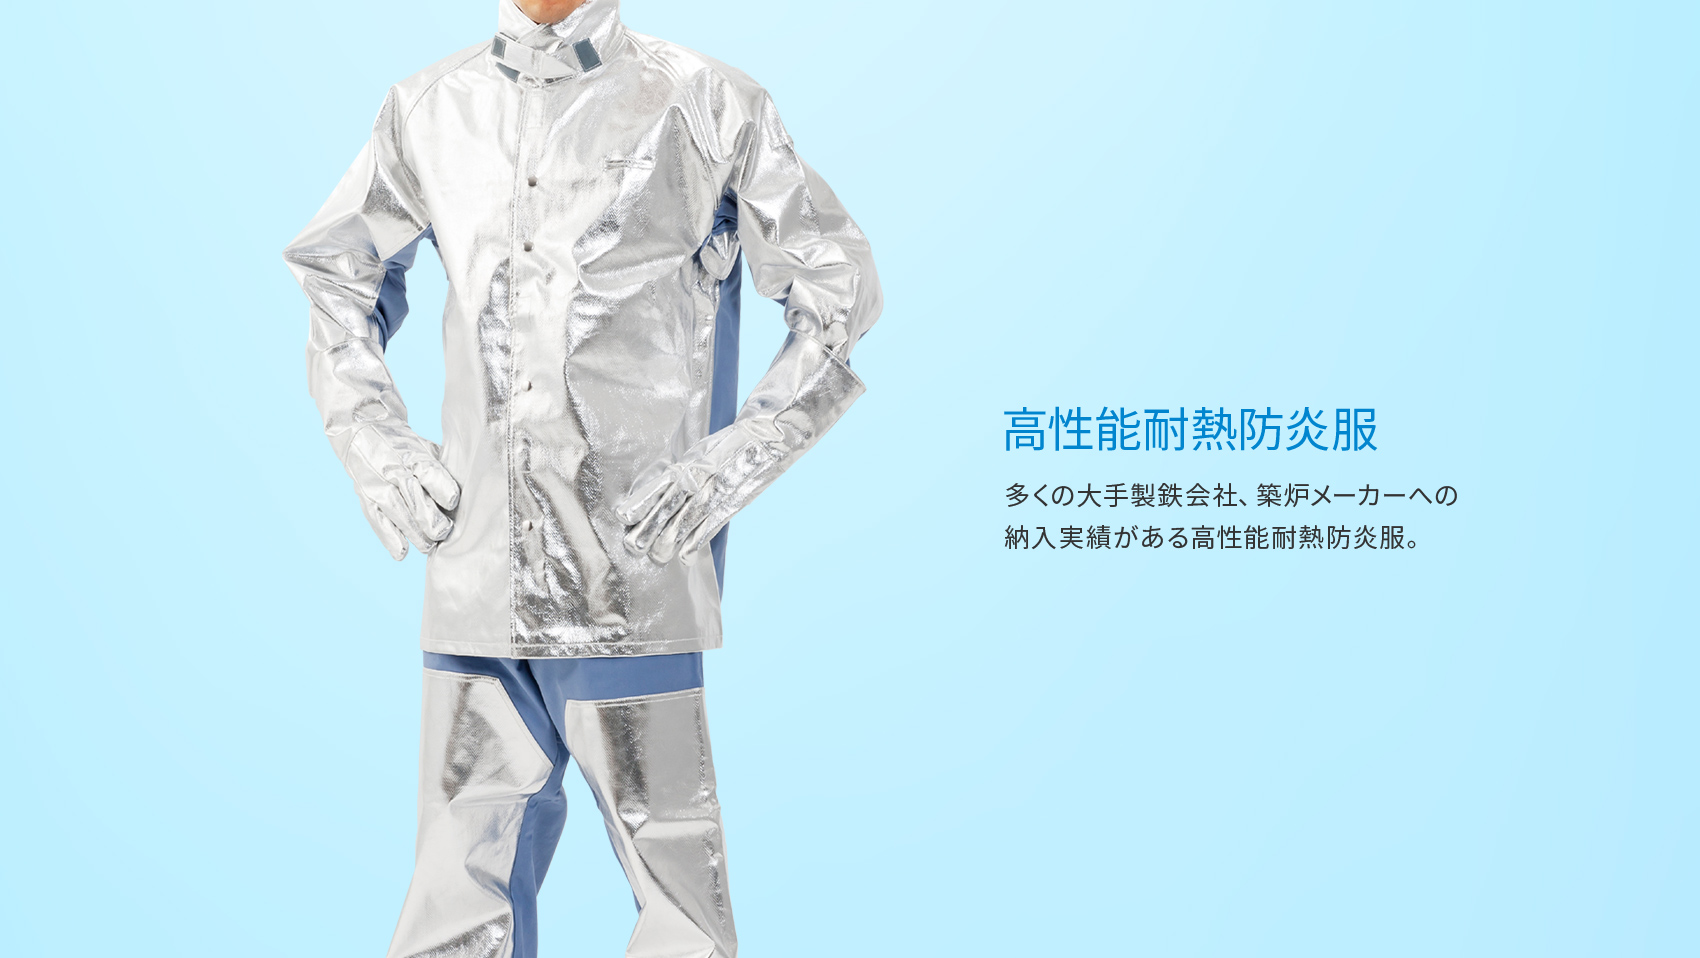 日本エンコン株式会社 緊急用シャワー 緊急用洗顔器 防火服 耐熱服